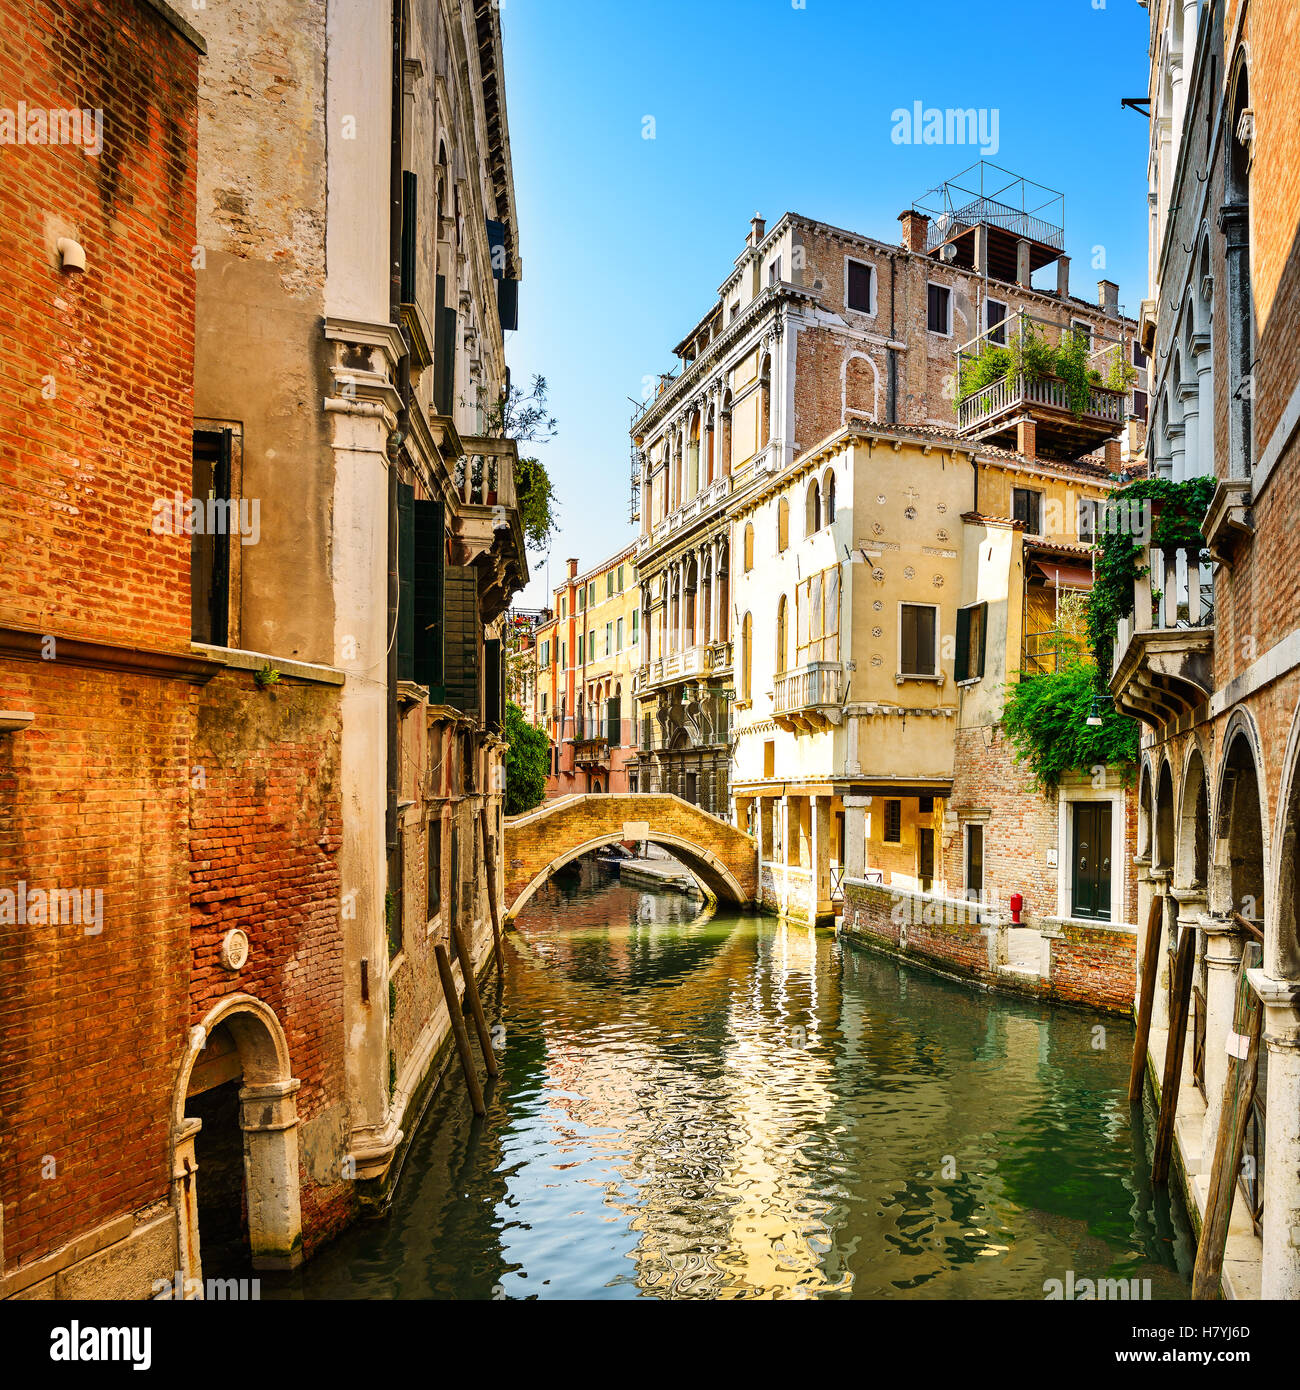 Venedig Sonnenuntergang Stadtbild, Wasserkanal, Brücke und traditionellen Gebäuden. Italien, Europa. Stockfoto